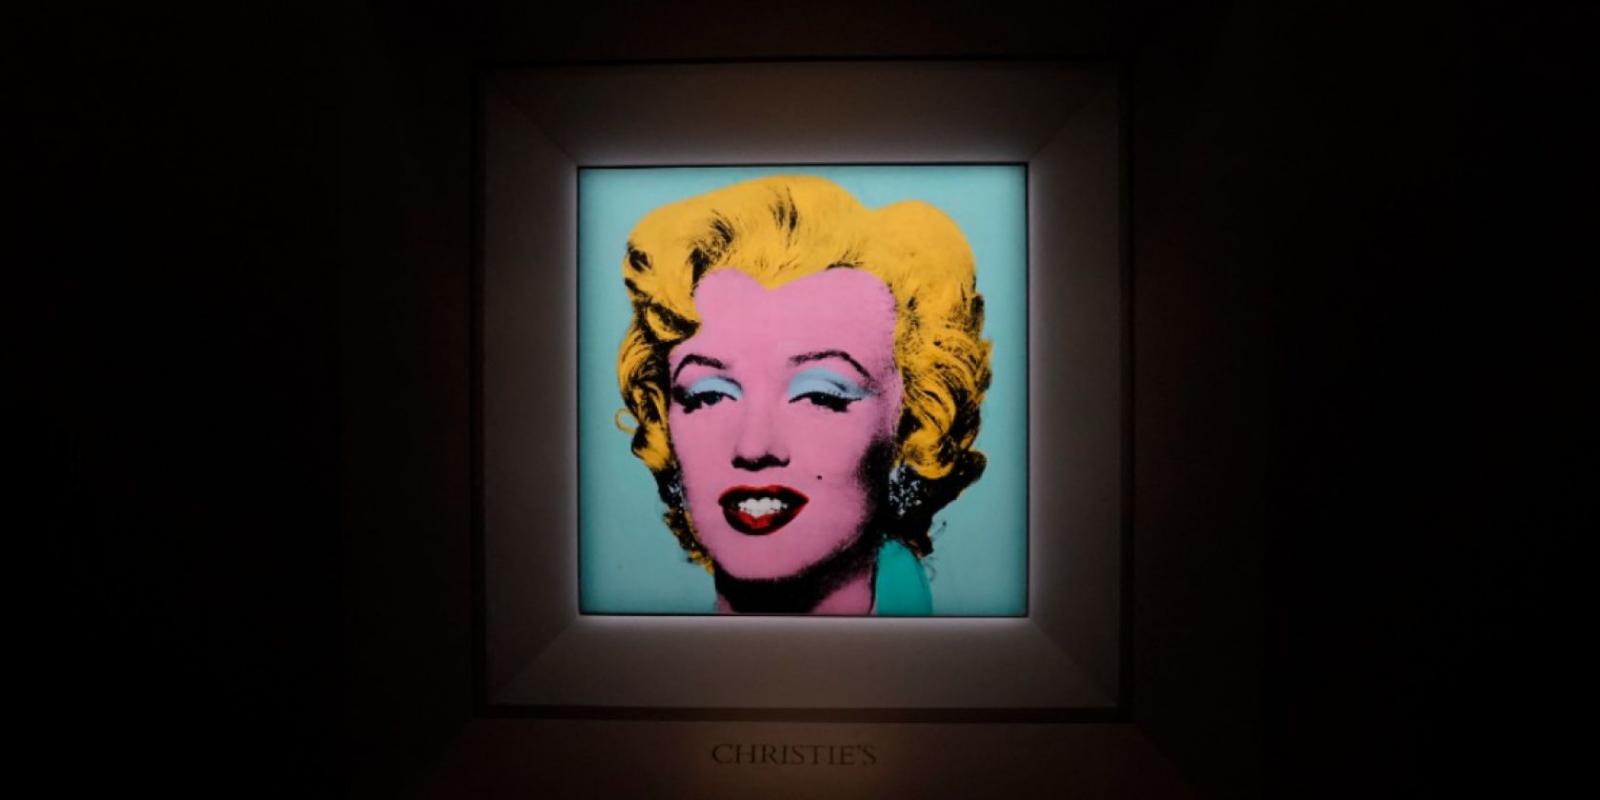 Record : un portrait de Marilyn Monroe vendu à 121 milliards de Cfa